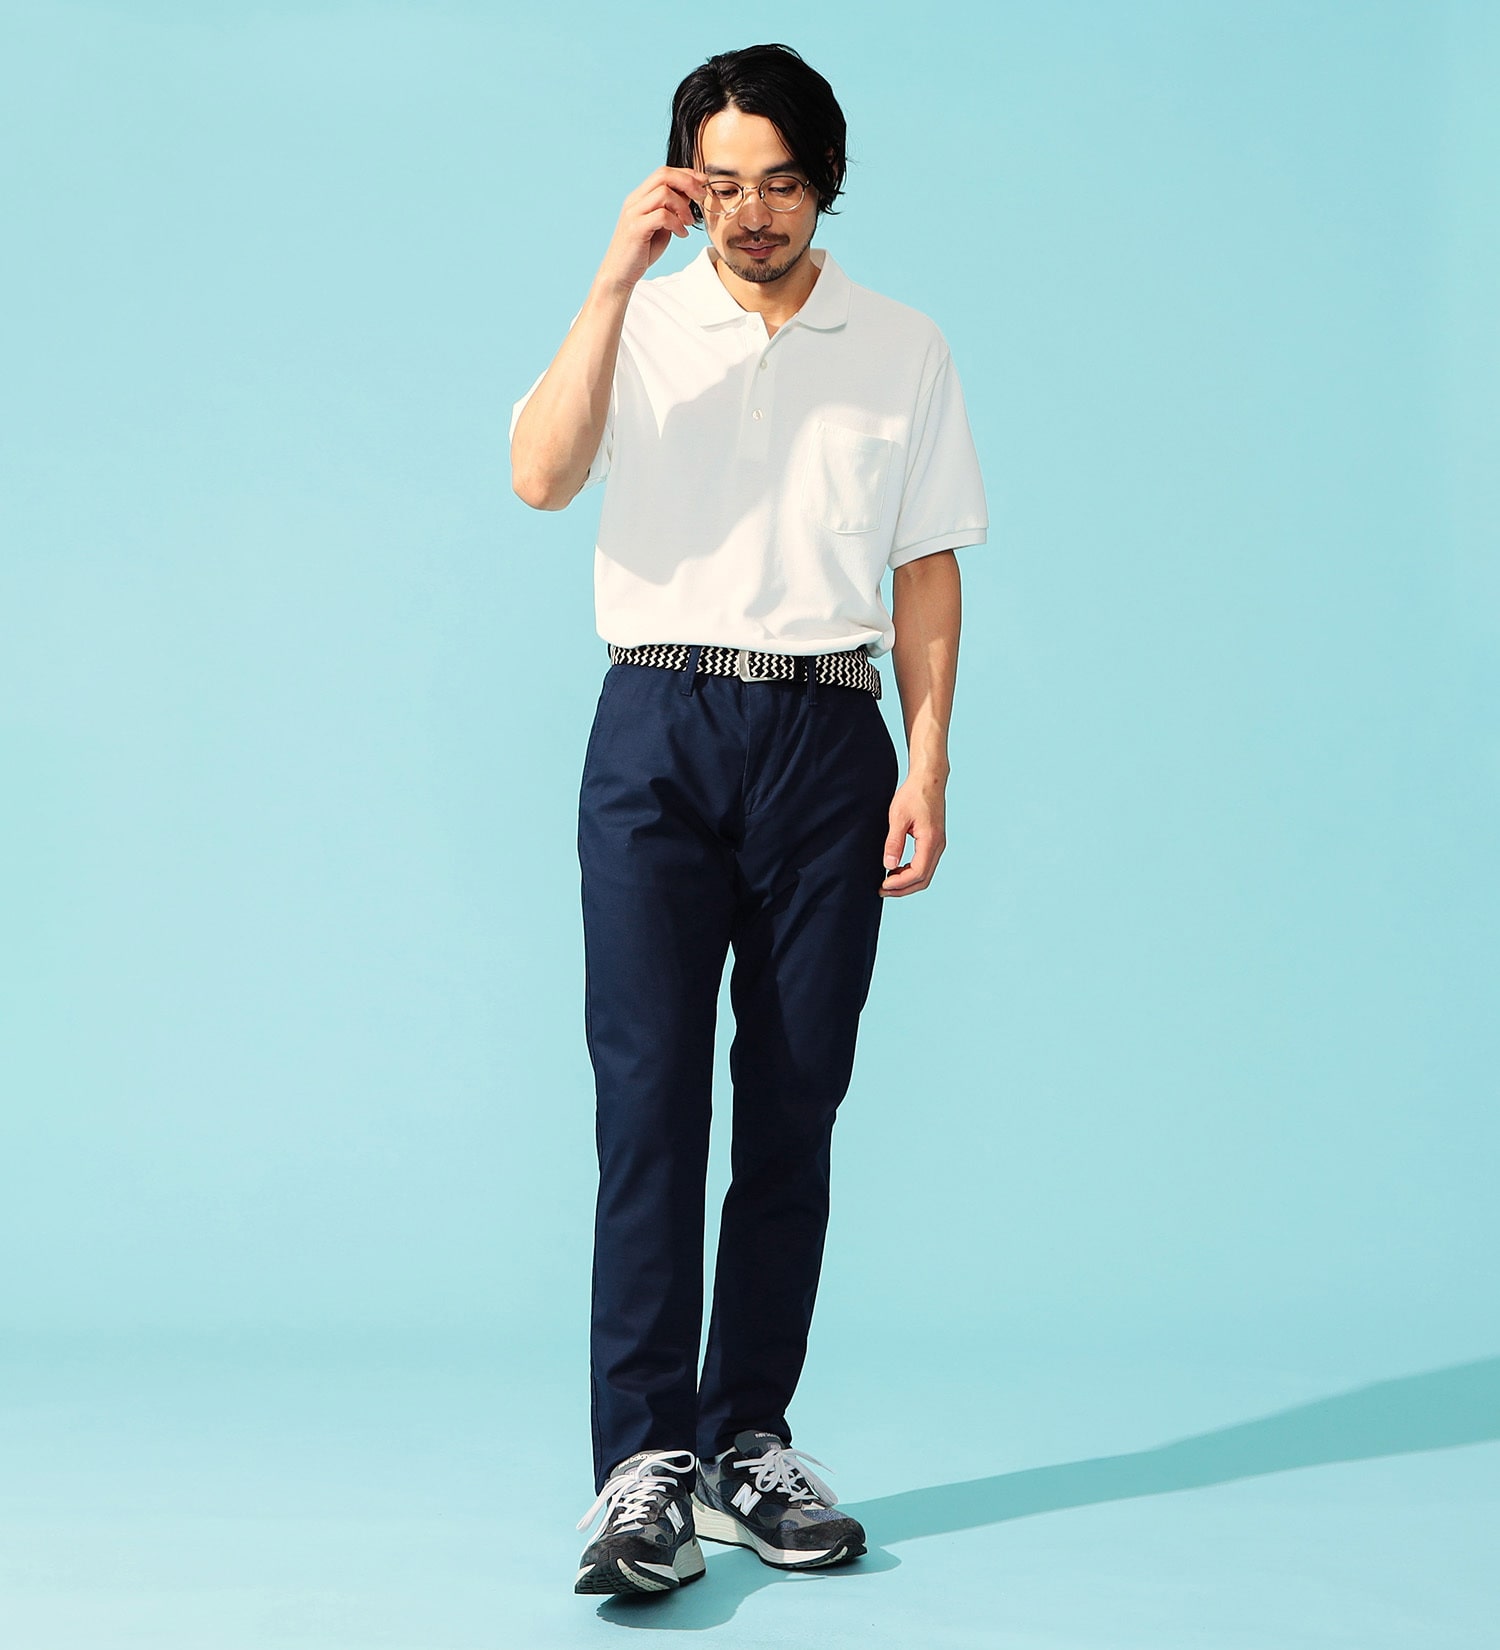 EDWIN(エドウイン)のCOOL FLEX レイシールド ポロシャツ 半袖|トップス/ポロシャツ/メンズ|ホワイト